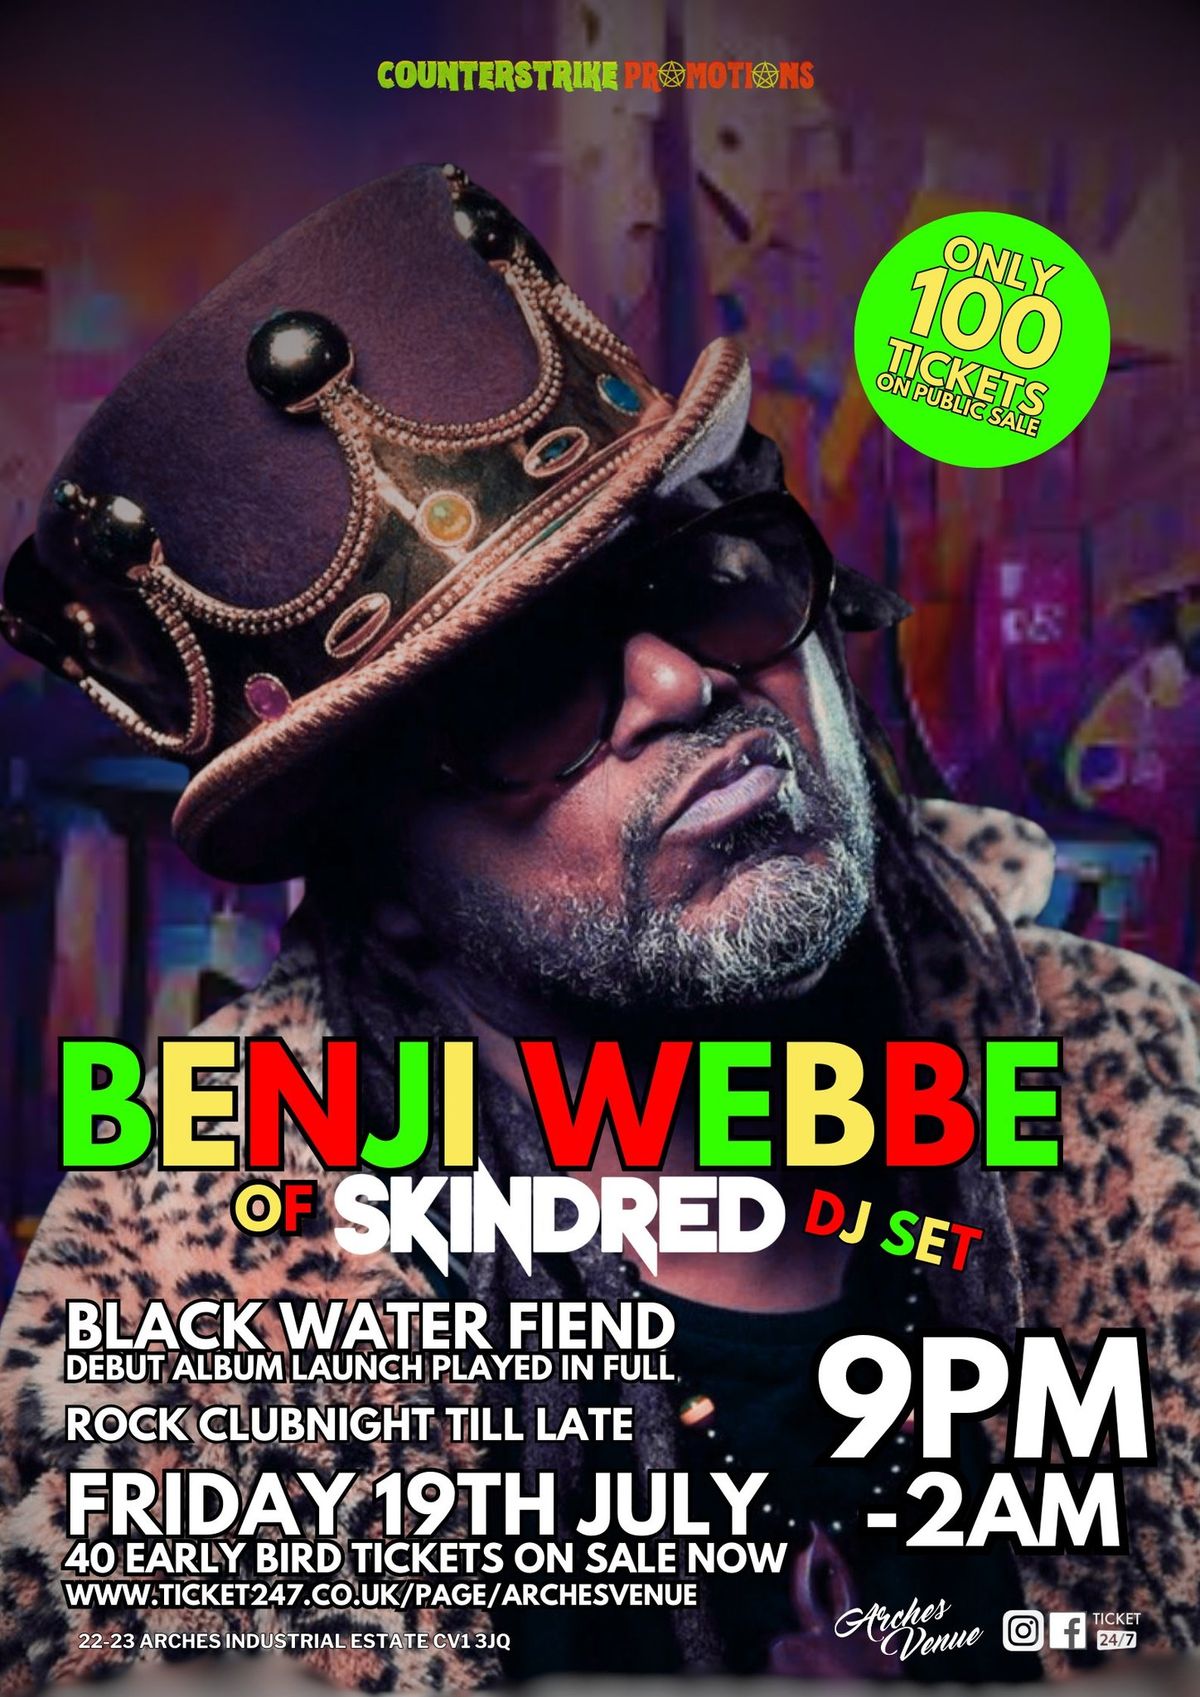 Benji Webbe DJ set + Black Water Fiend debut album, & Rock Club Night 